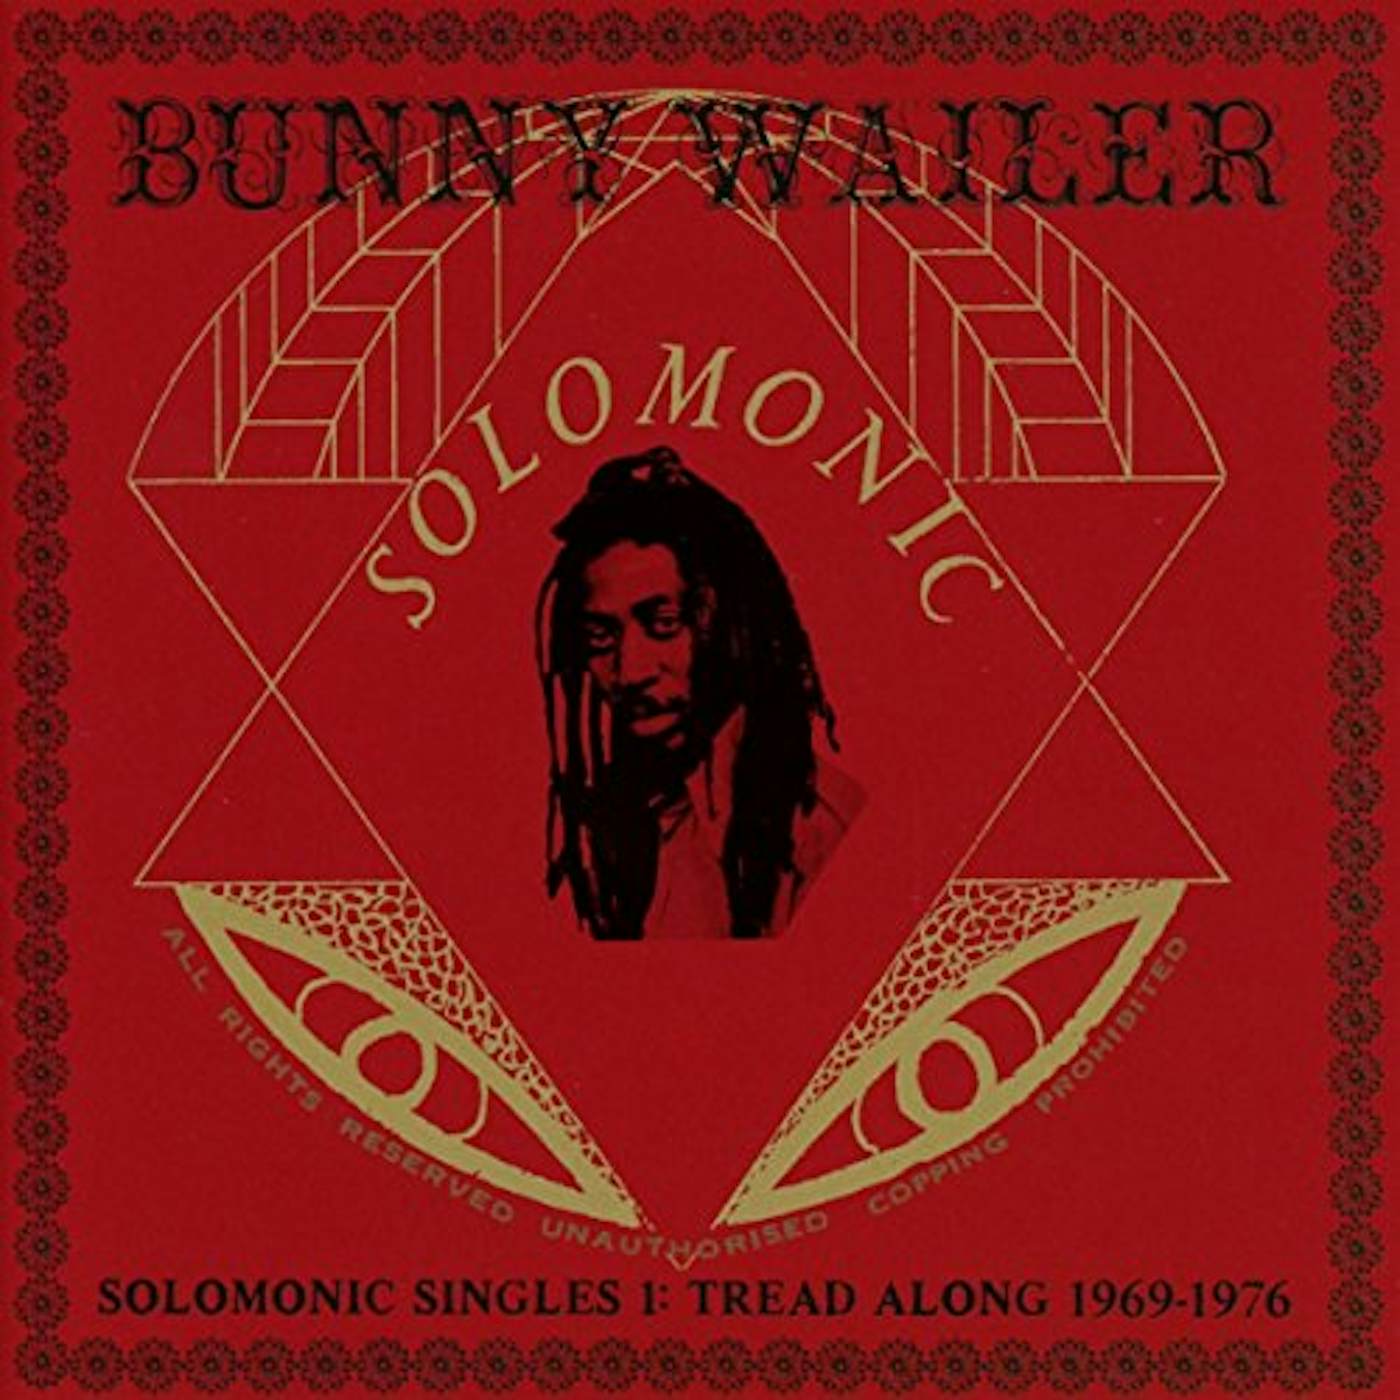 Bunny Wailer SOLOMONIC SINGLES 1: TREAD ALONG 1969-1976 CD